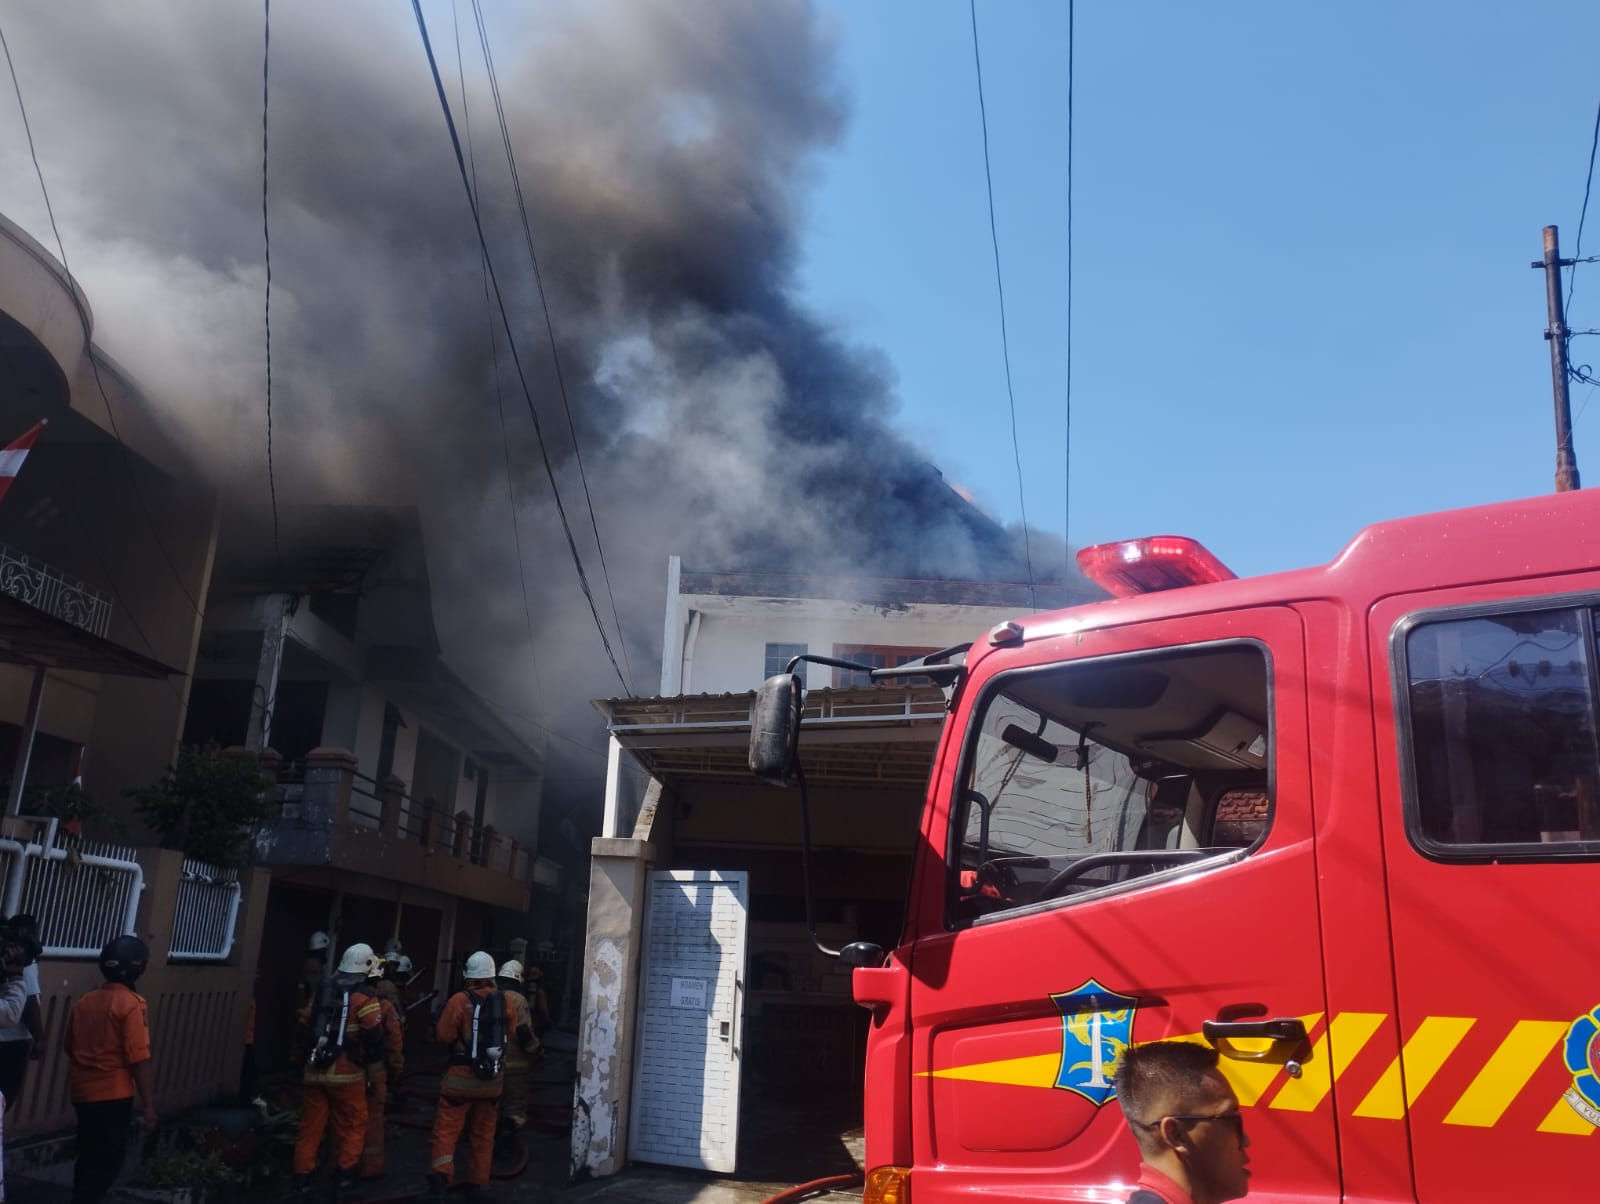 BREAKING NEWS: Kebakaran di Gudang Boneka Jemur Wonosari, Wonocolo, Surabaya